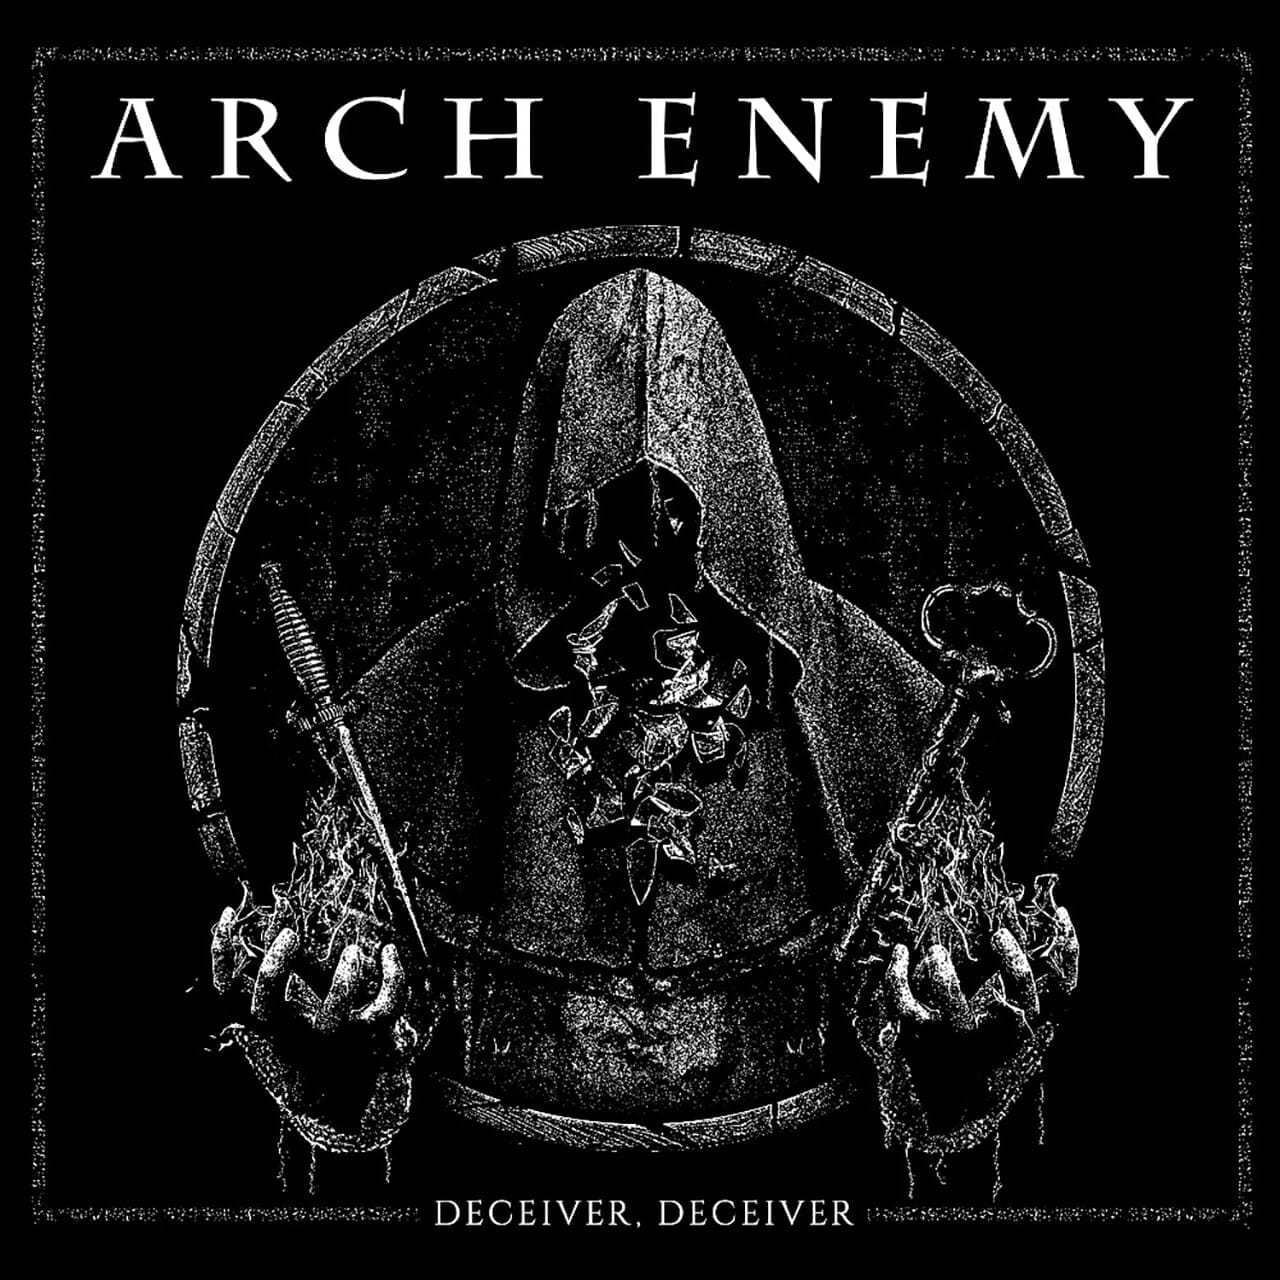 Arch Enemy - Deceiver, Deceiver - Cover 2021